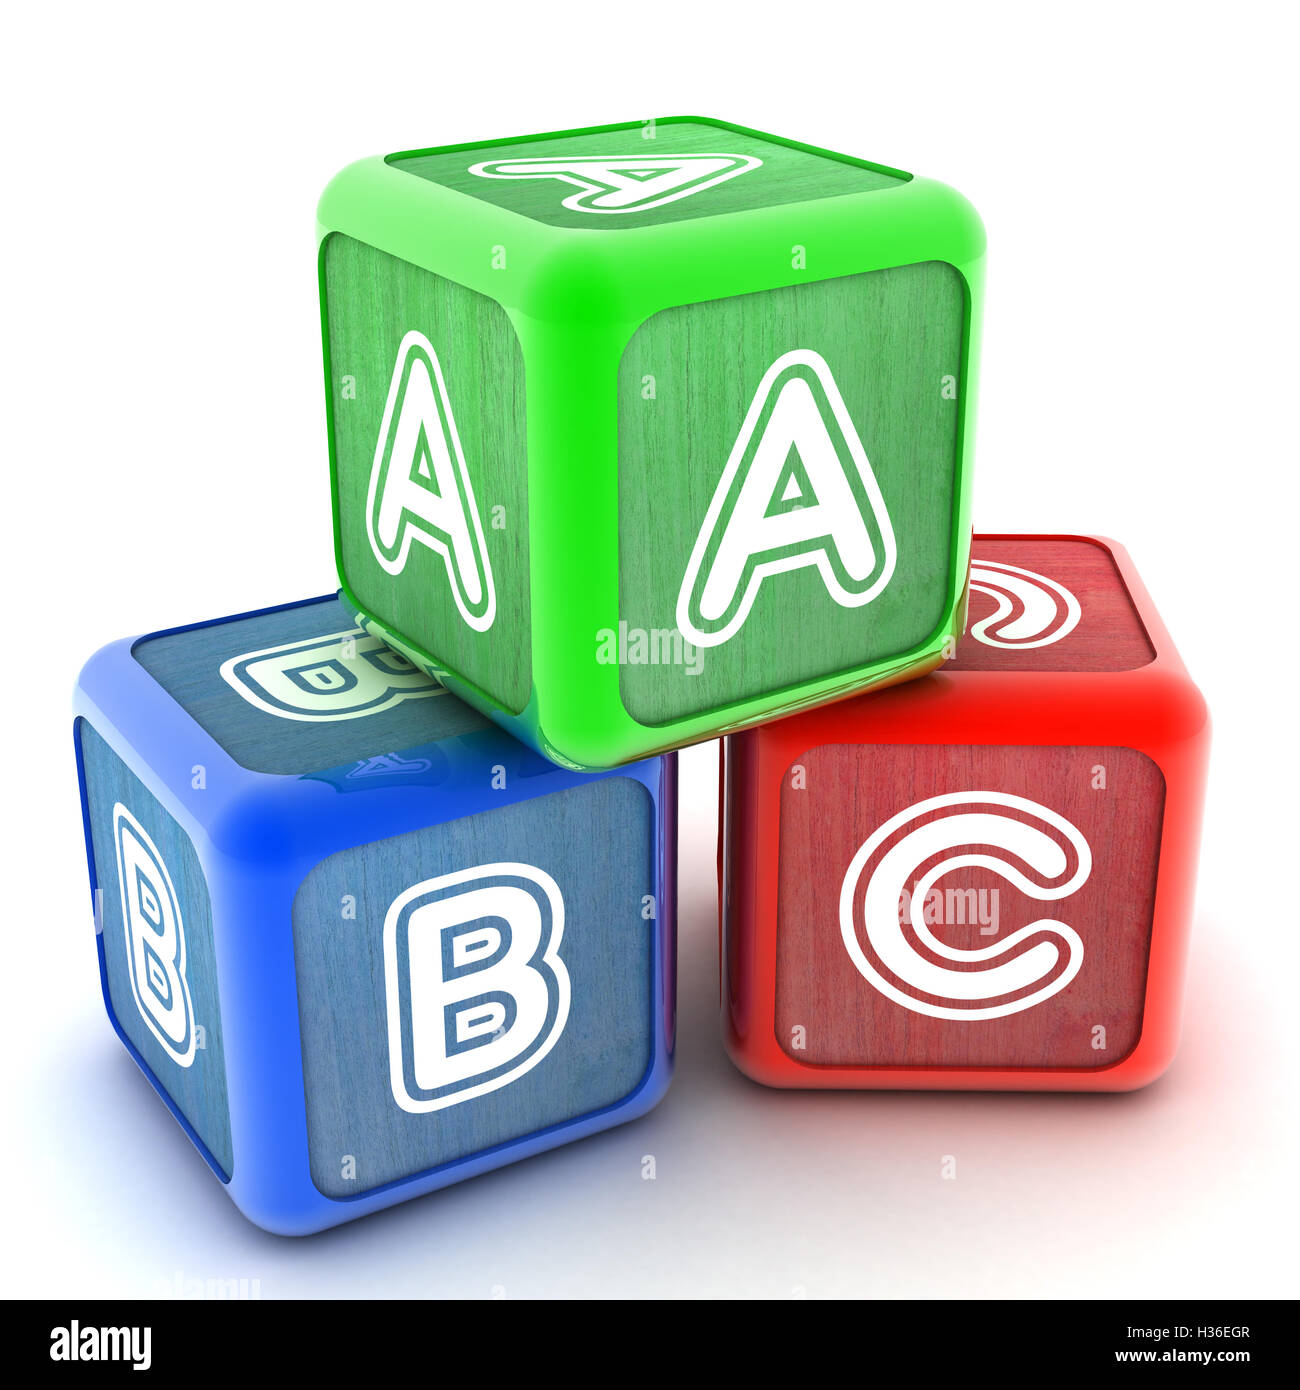 ABC Building Blocks Stock Photo